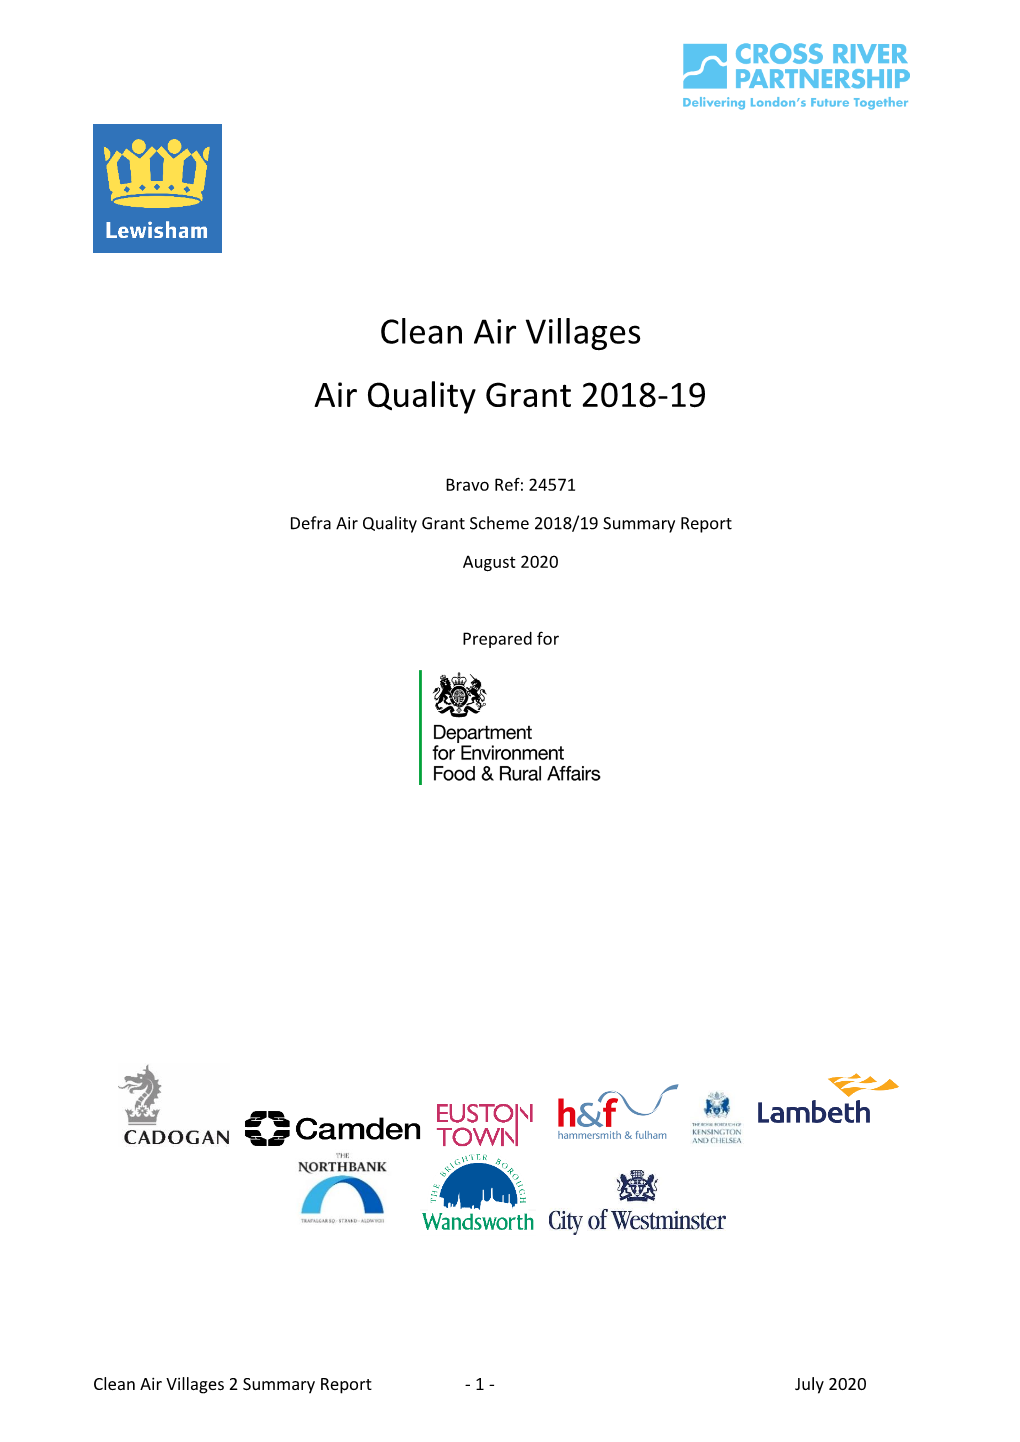 Defra Air Quality Grant Scheme 2018/19 Summary Report